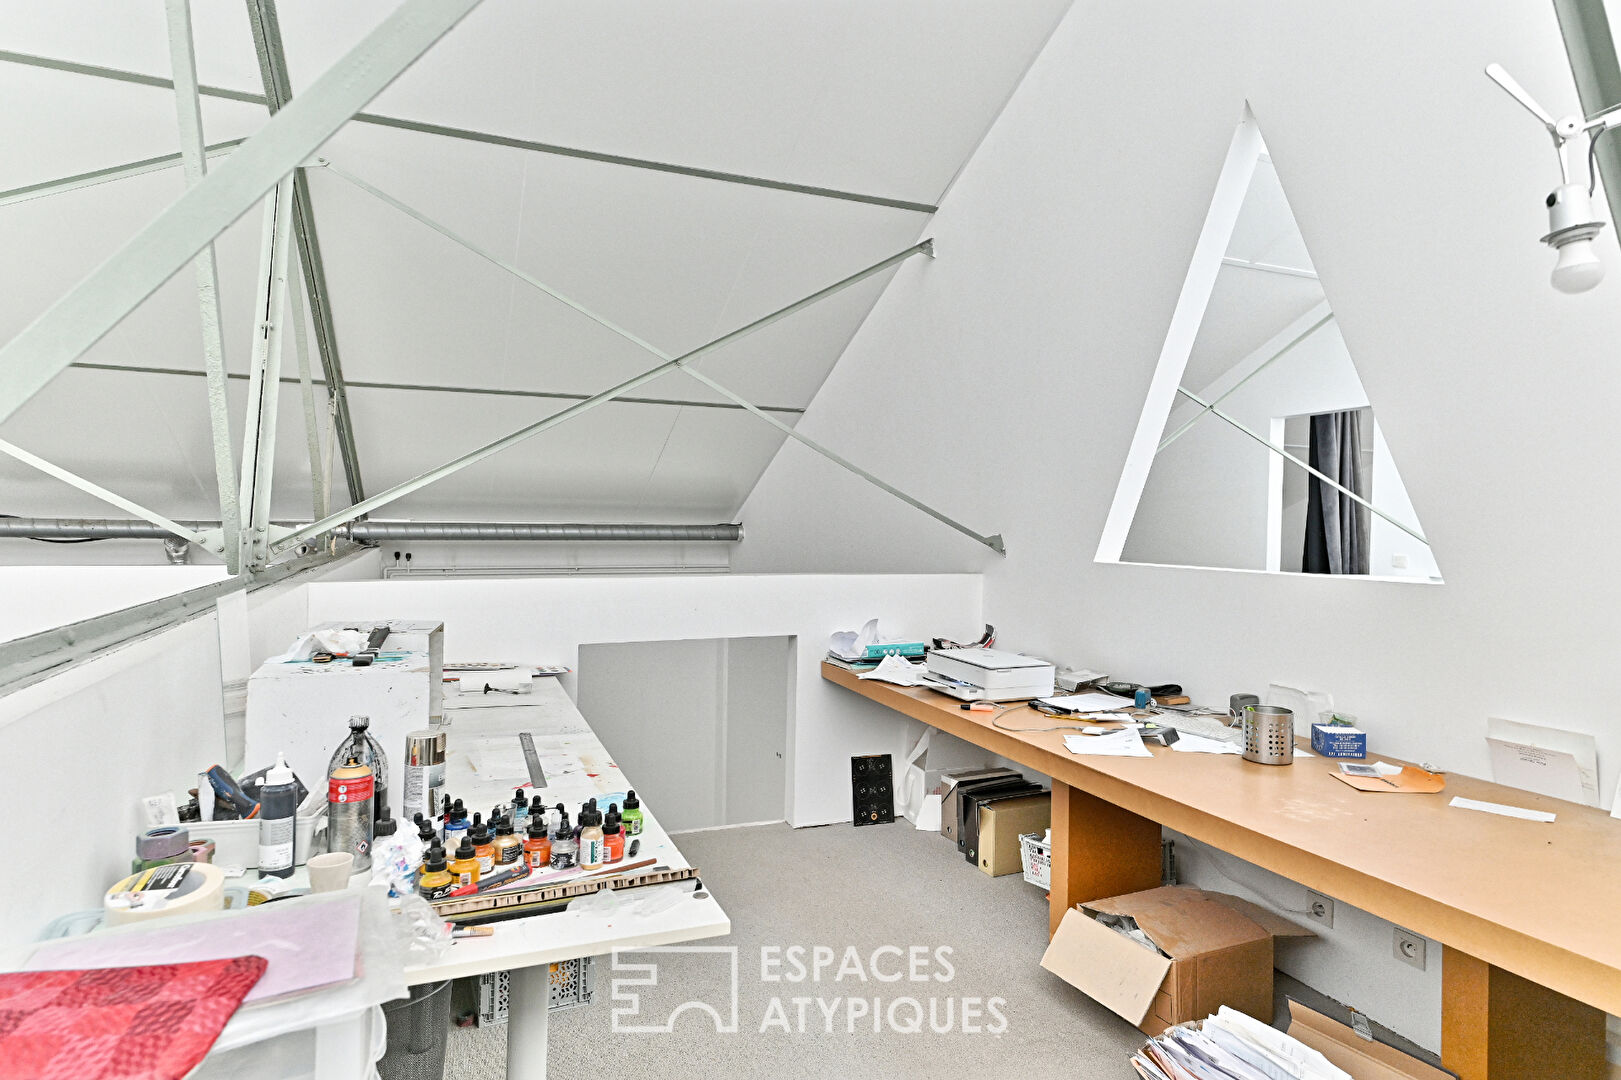 Japanese-style architect’s loft on the outskirts of Paris